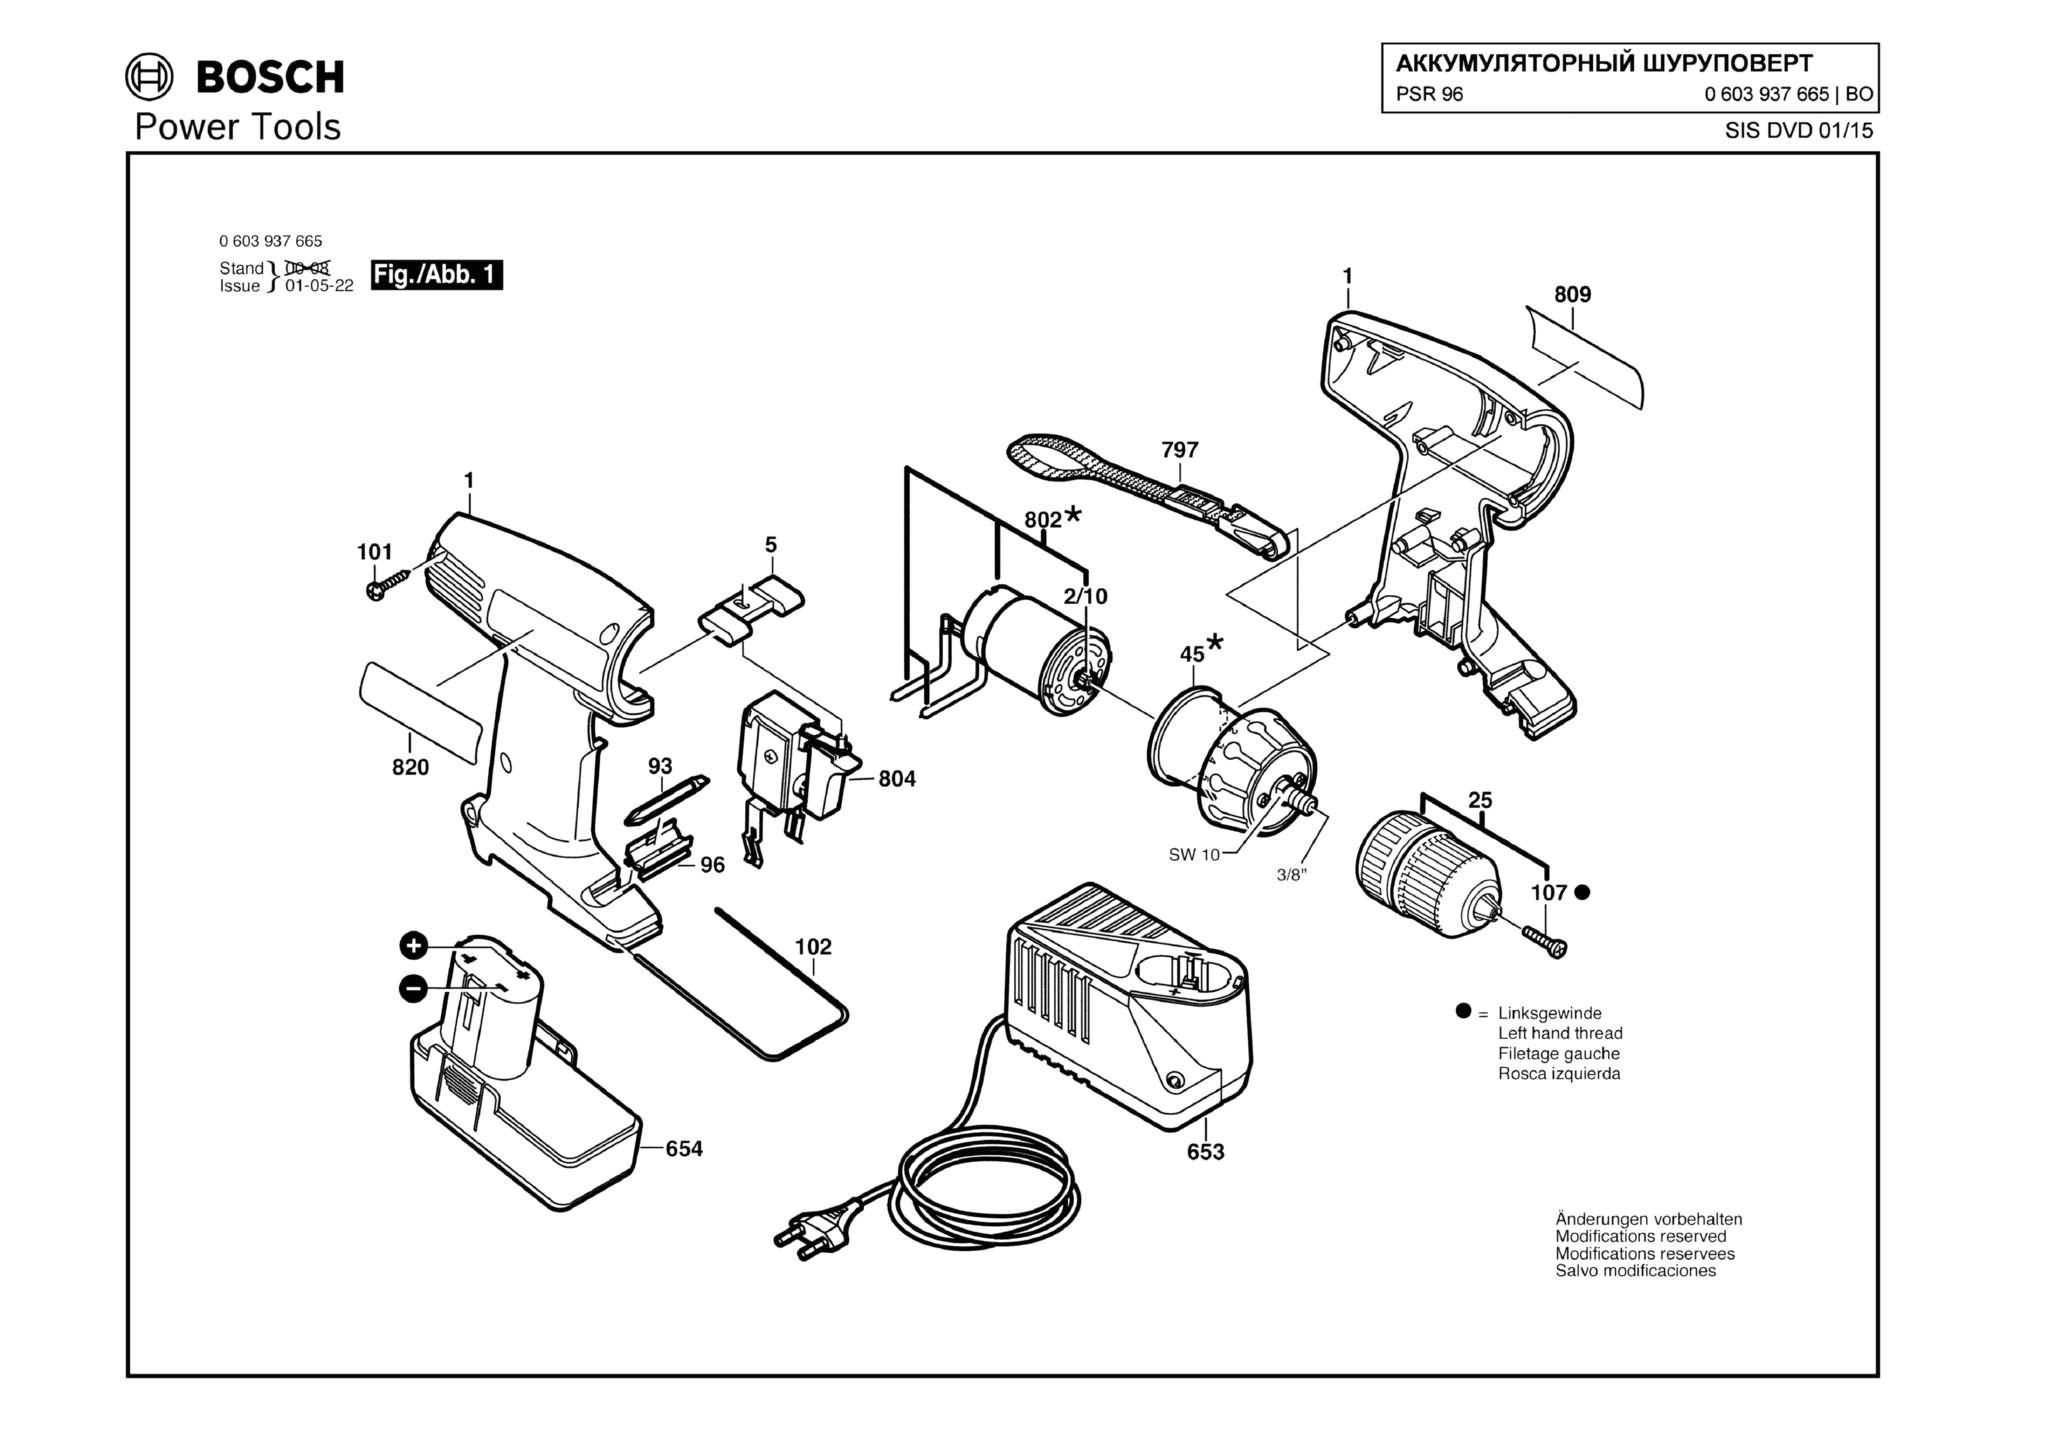 Запчасти, схема и деталировка Bosch PSR 96 (ТИП 0603937665)